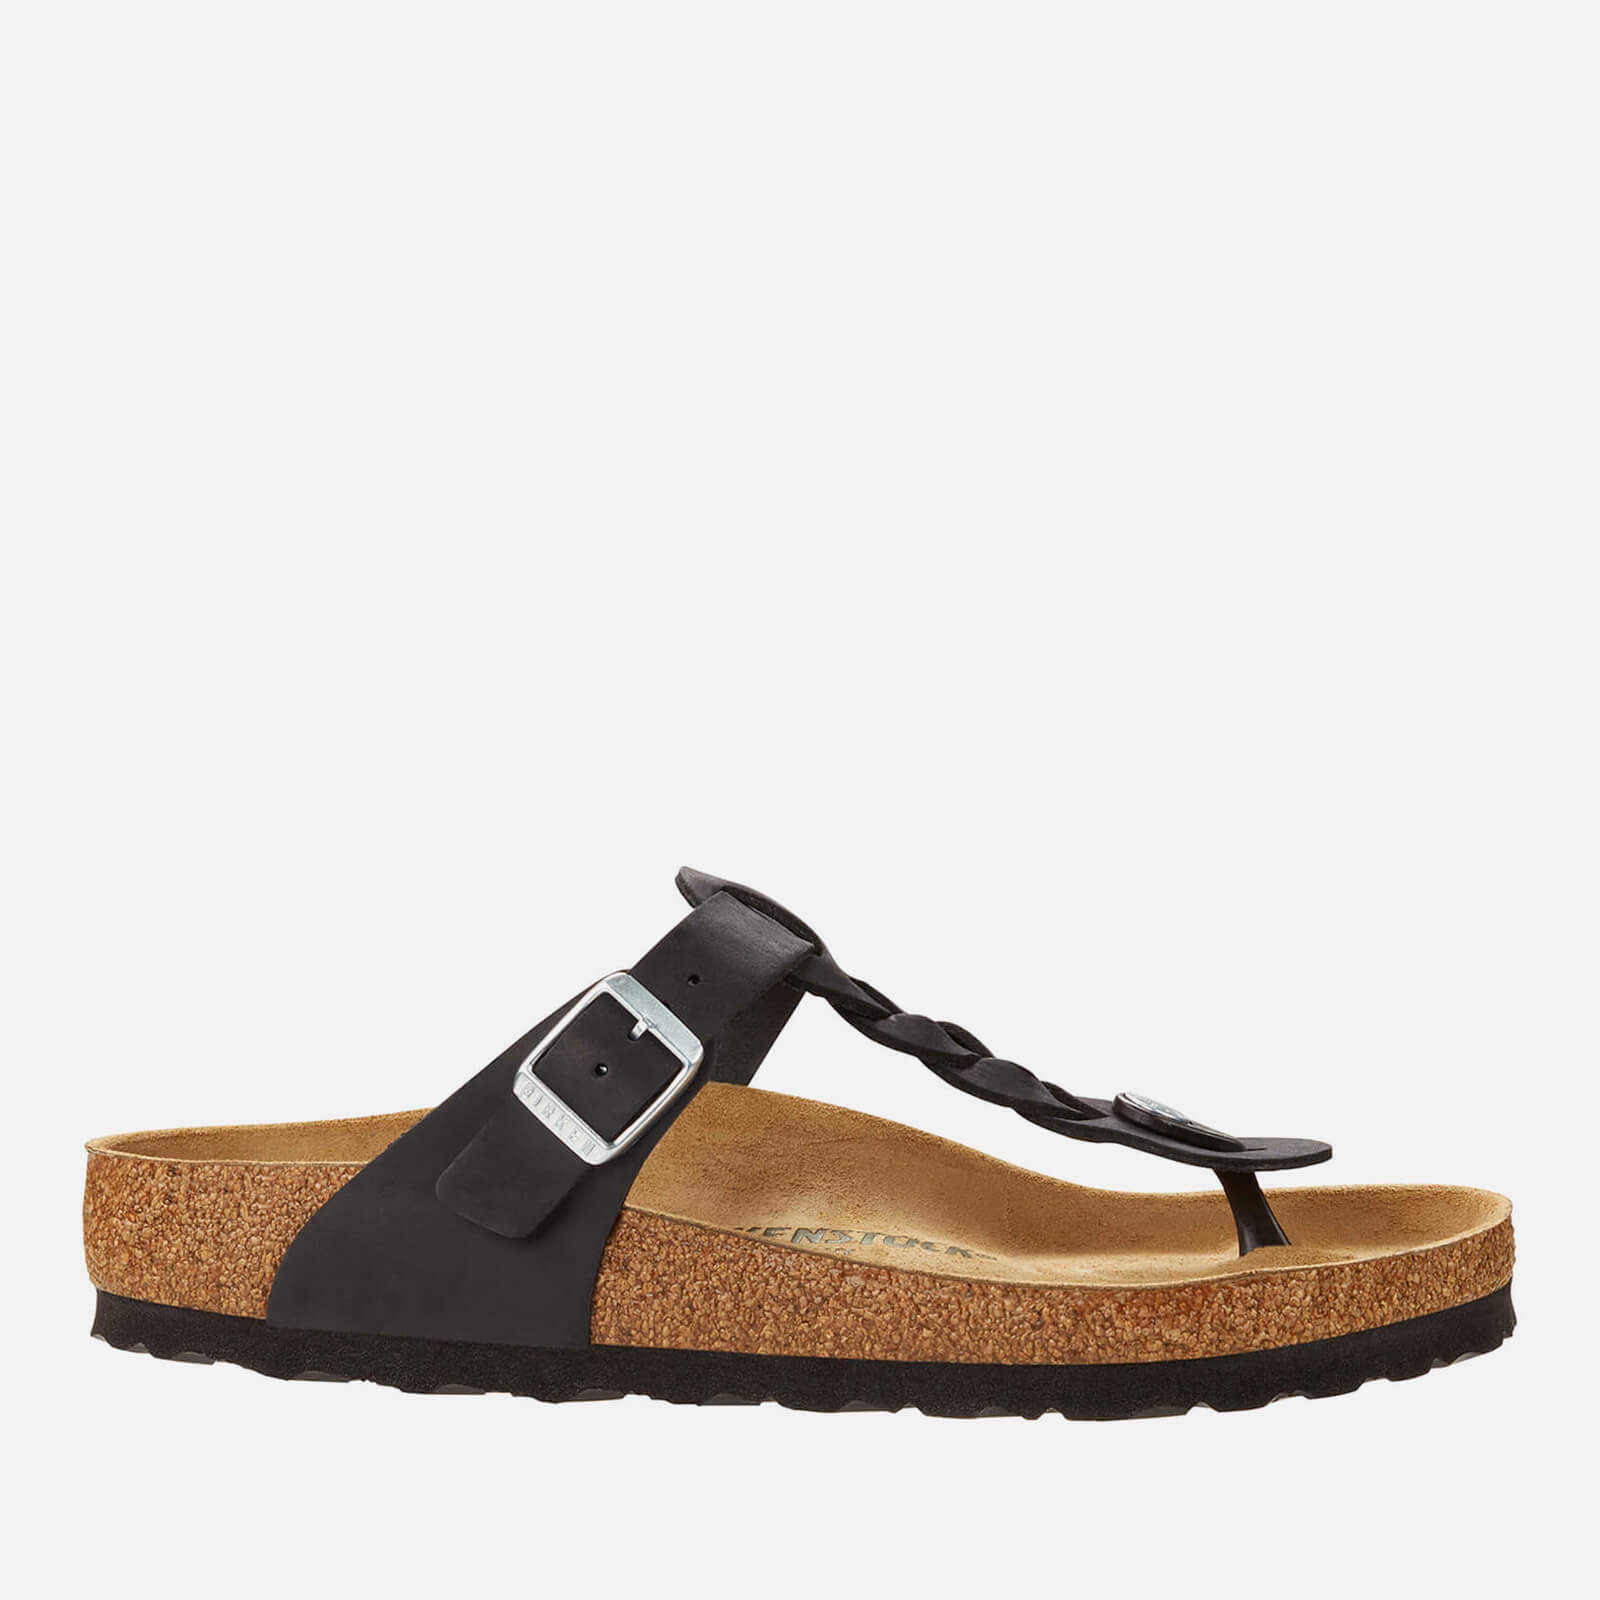 Birkenstock Women’s Slim-Fit Braided Leather Sandals